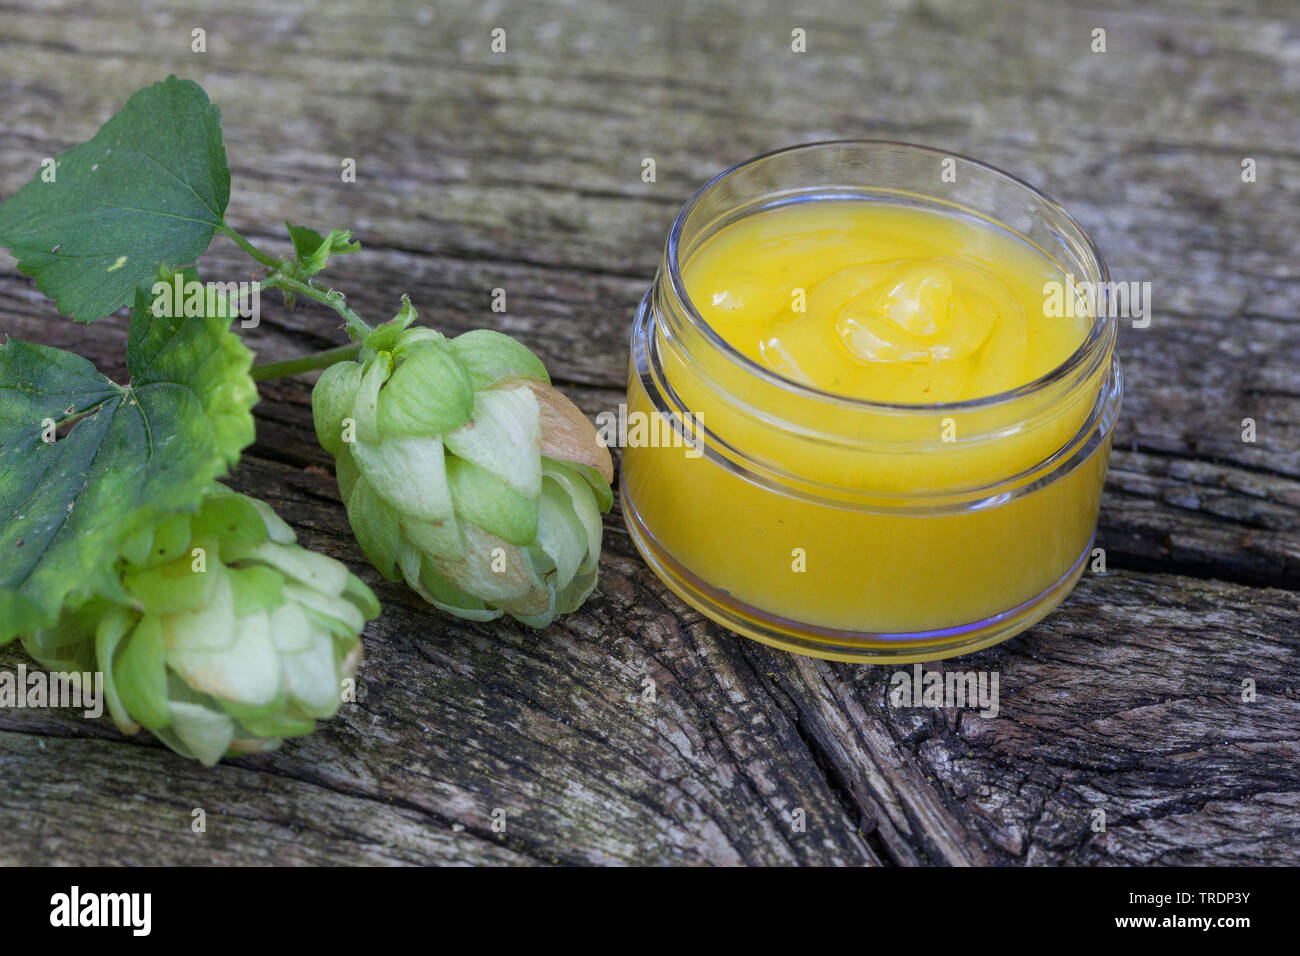 common hop (Humulus lupulus), production of hop creme, Germany Stock Photo